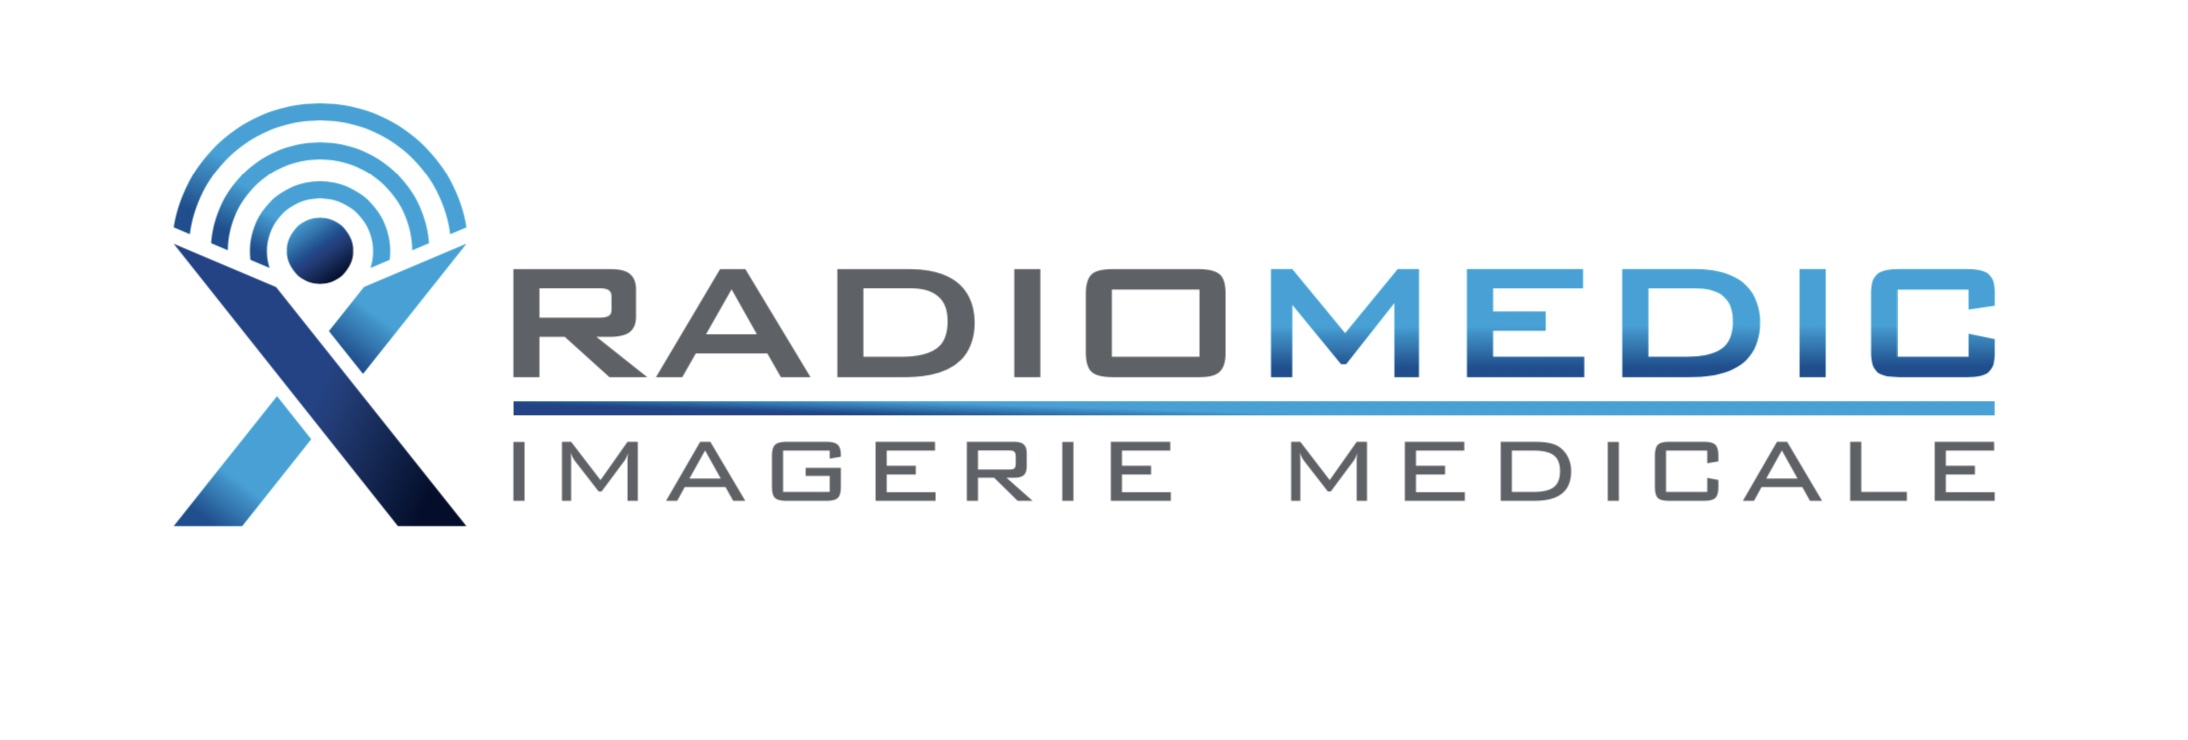 Radiologie Radiomedic